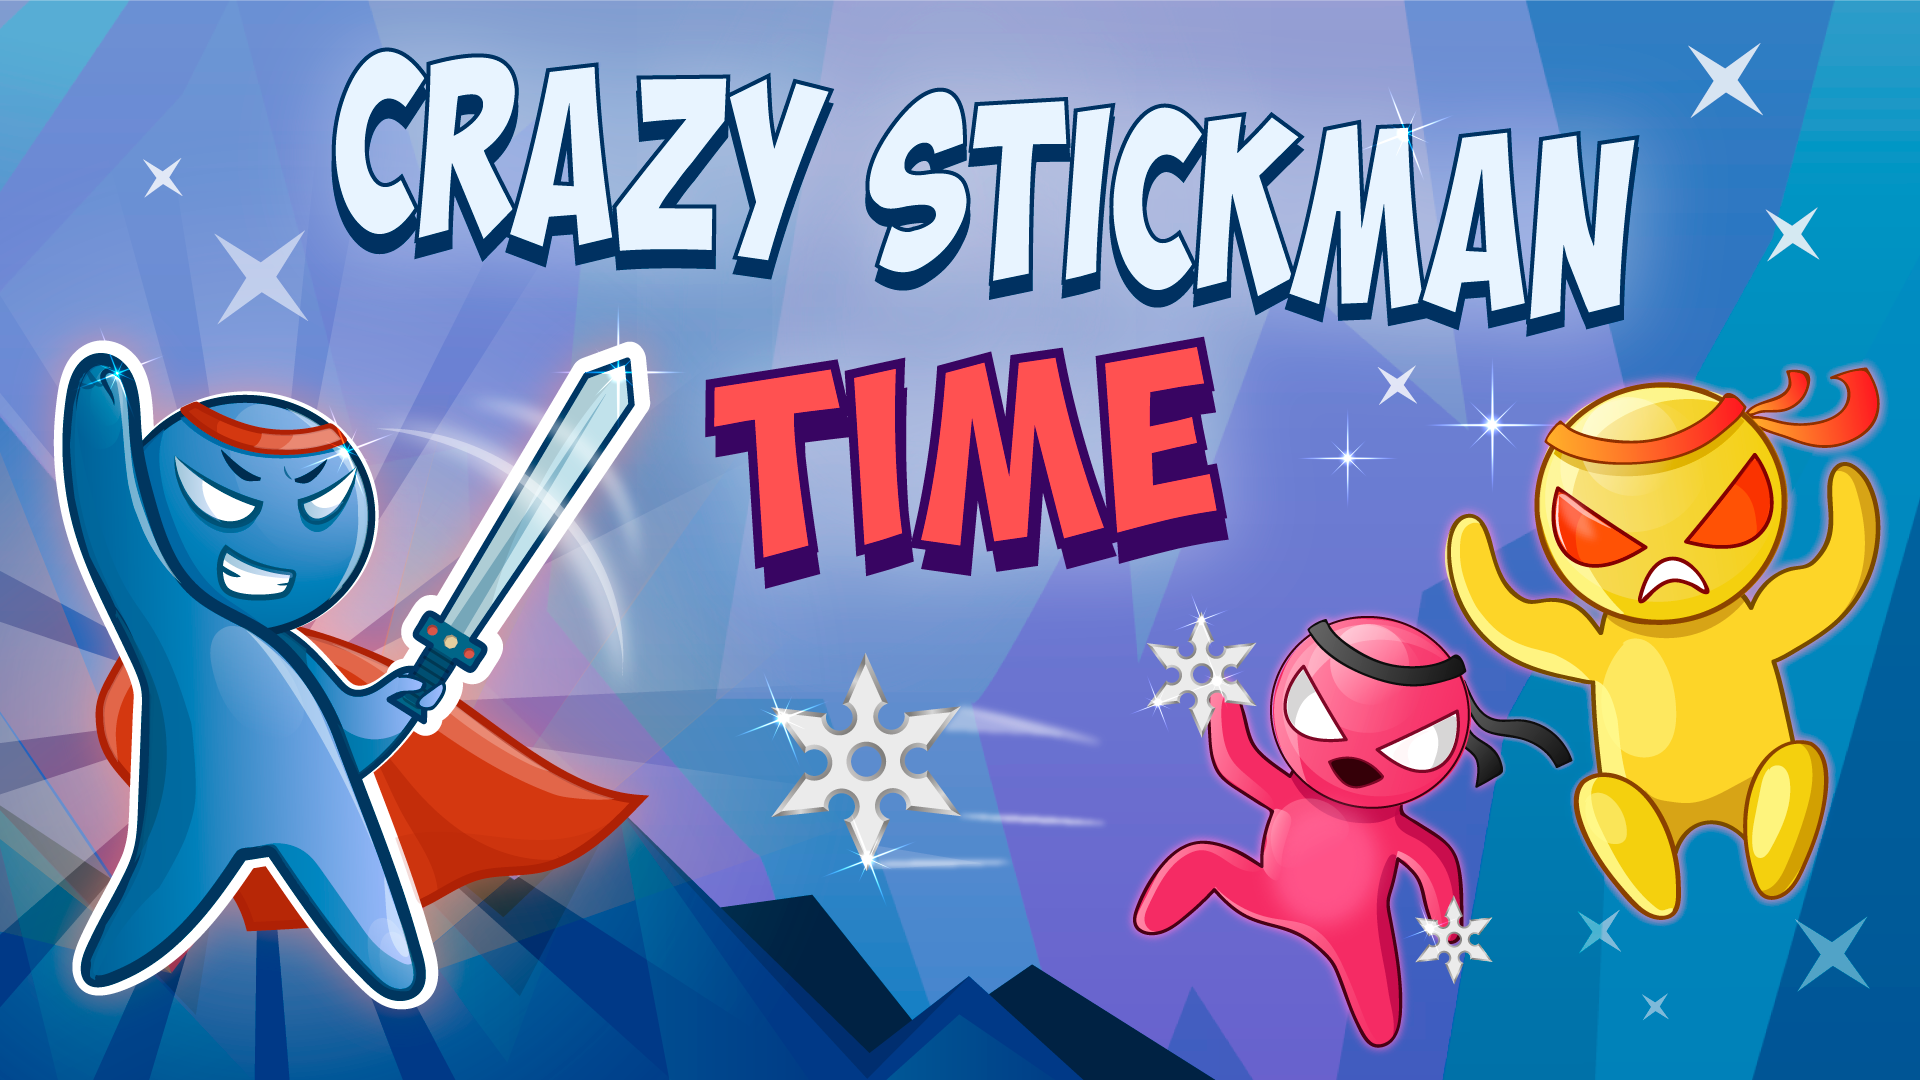 Screenshot of Crazy stickman time